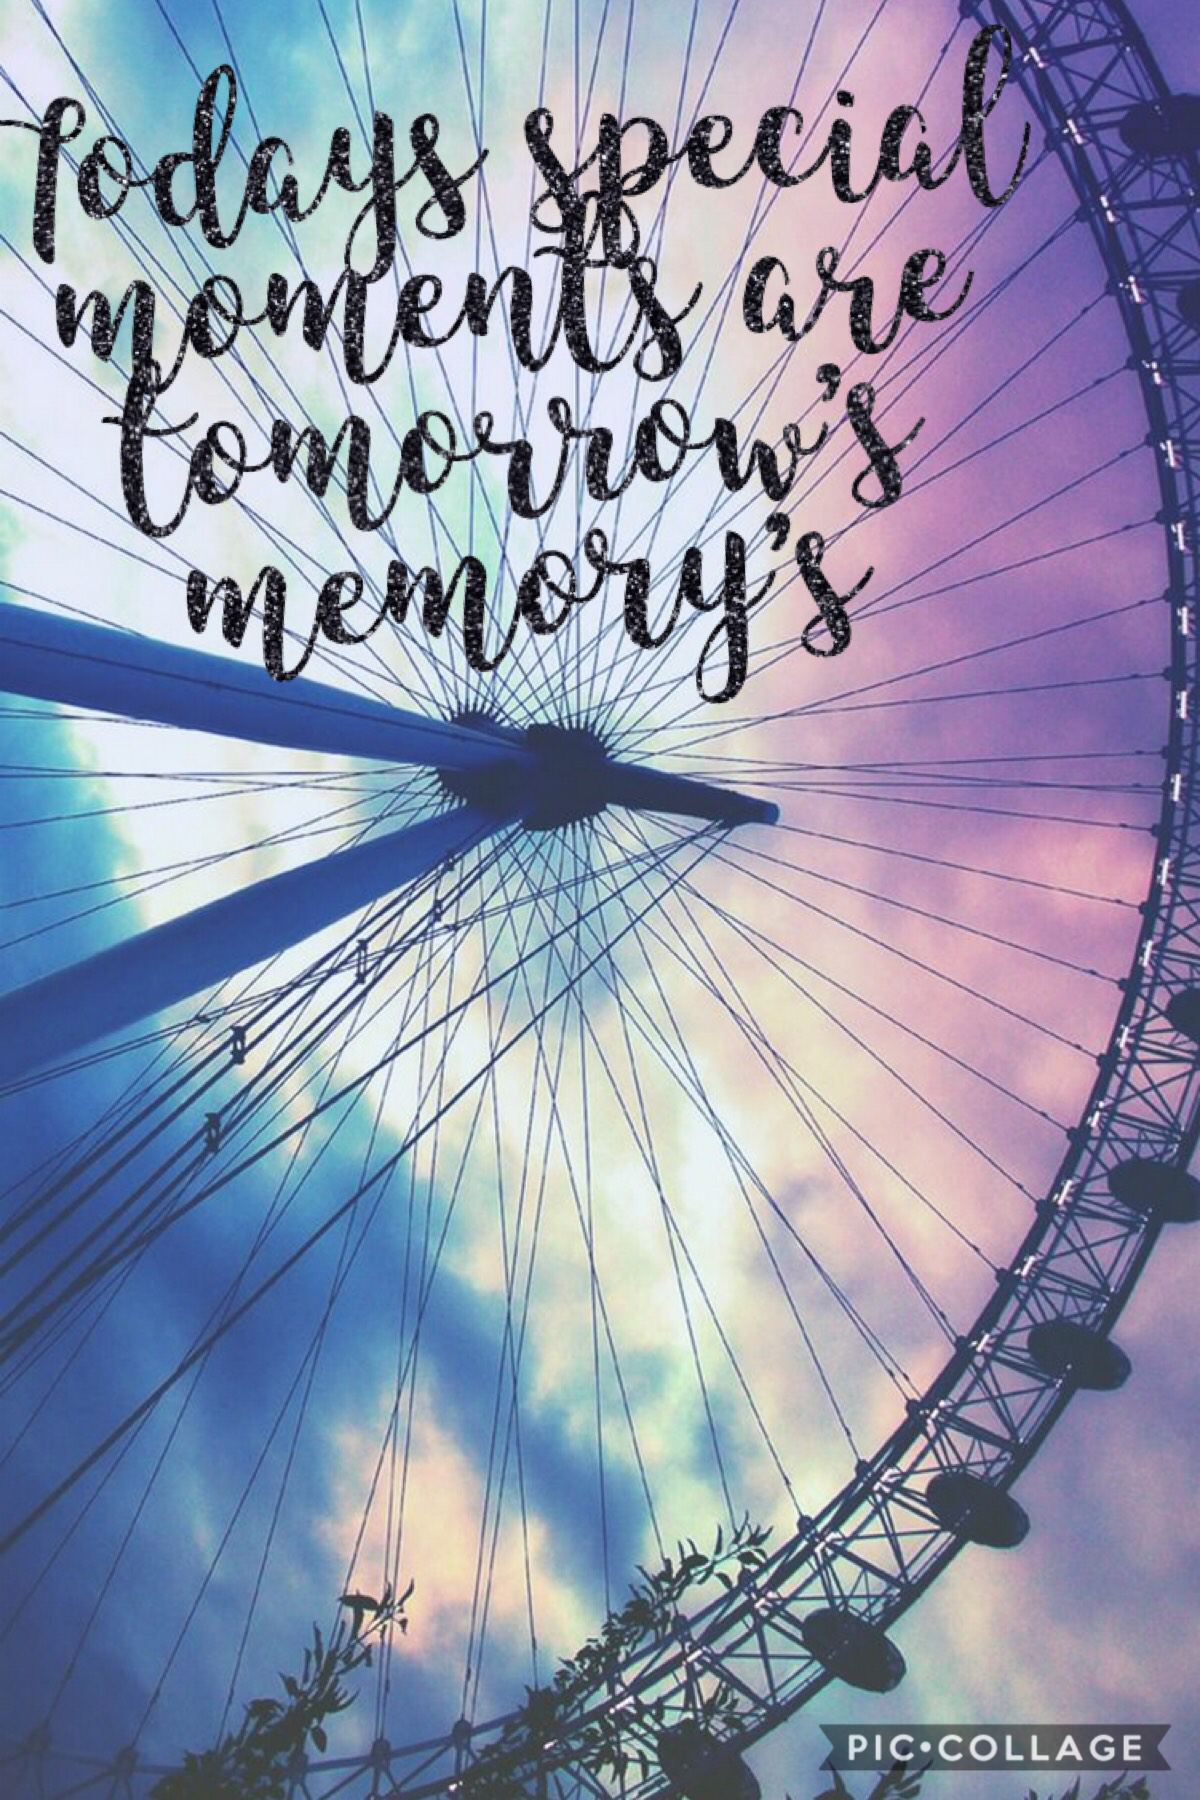 U need some memories